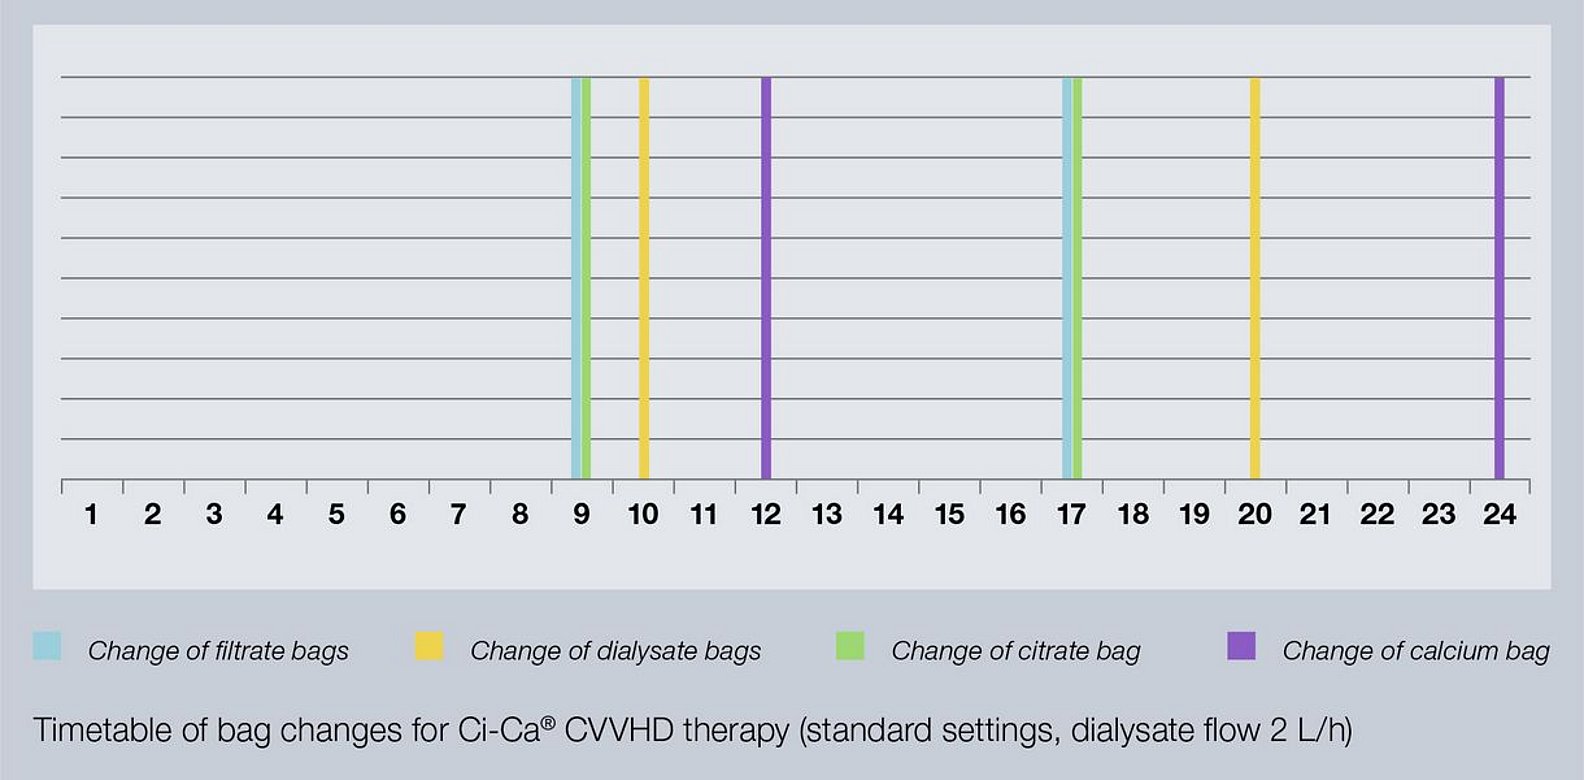 Zeitplan der Beutelwechsel einer Ci-Ca®CVVHD Behandlung